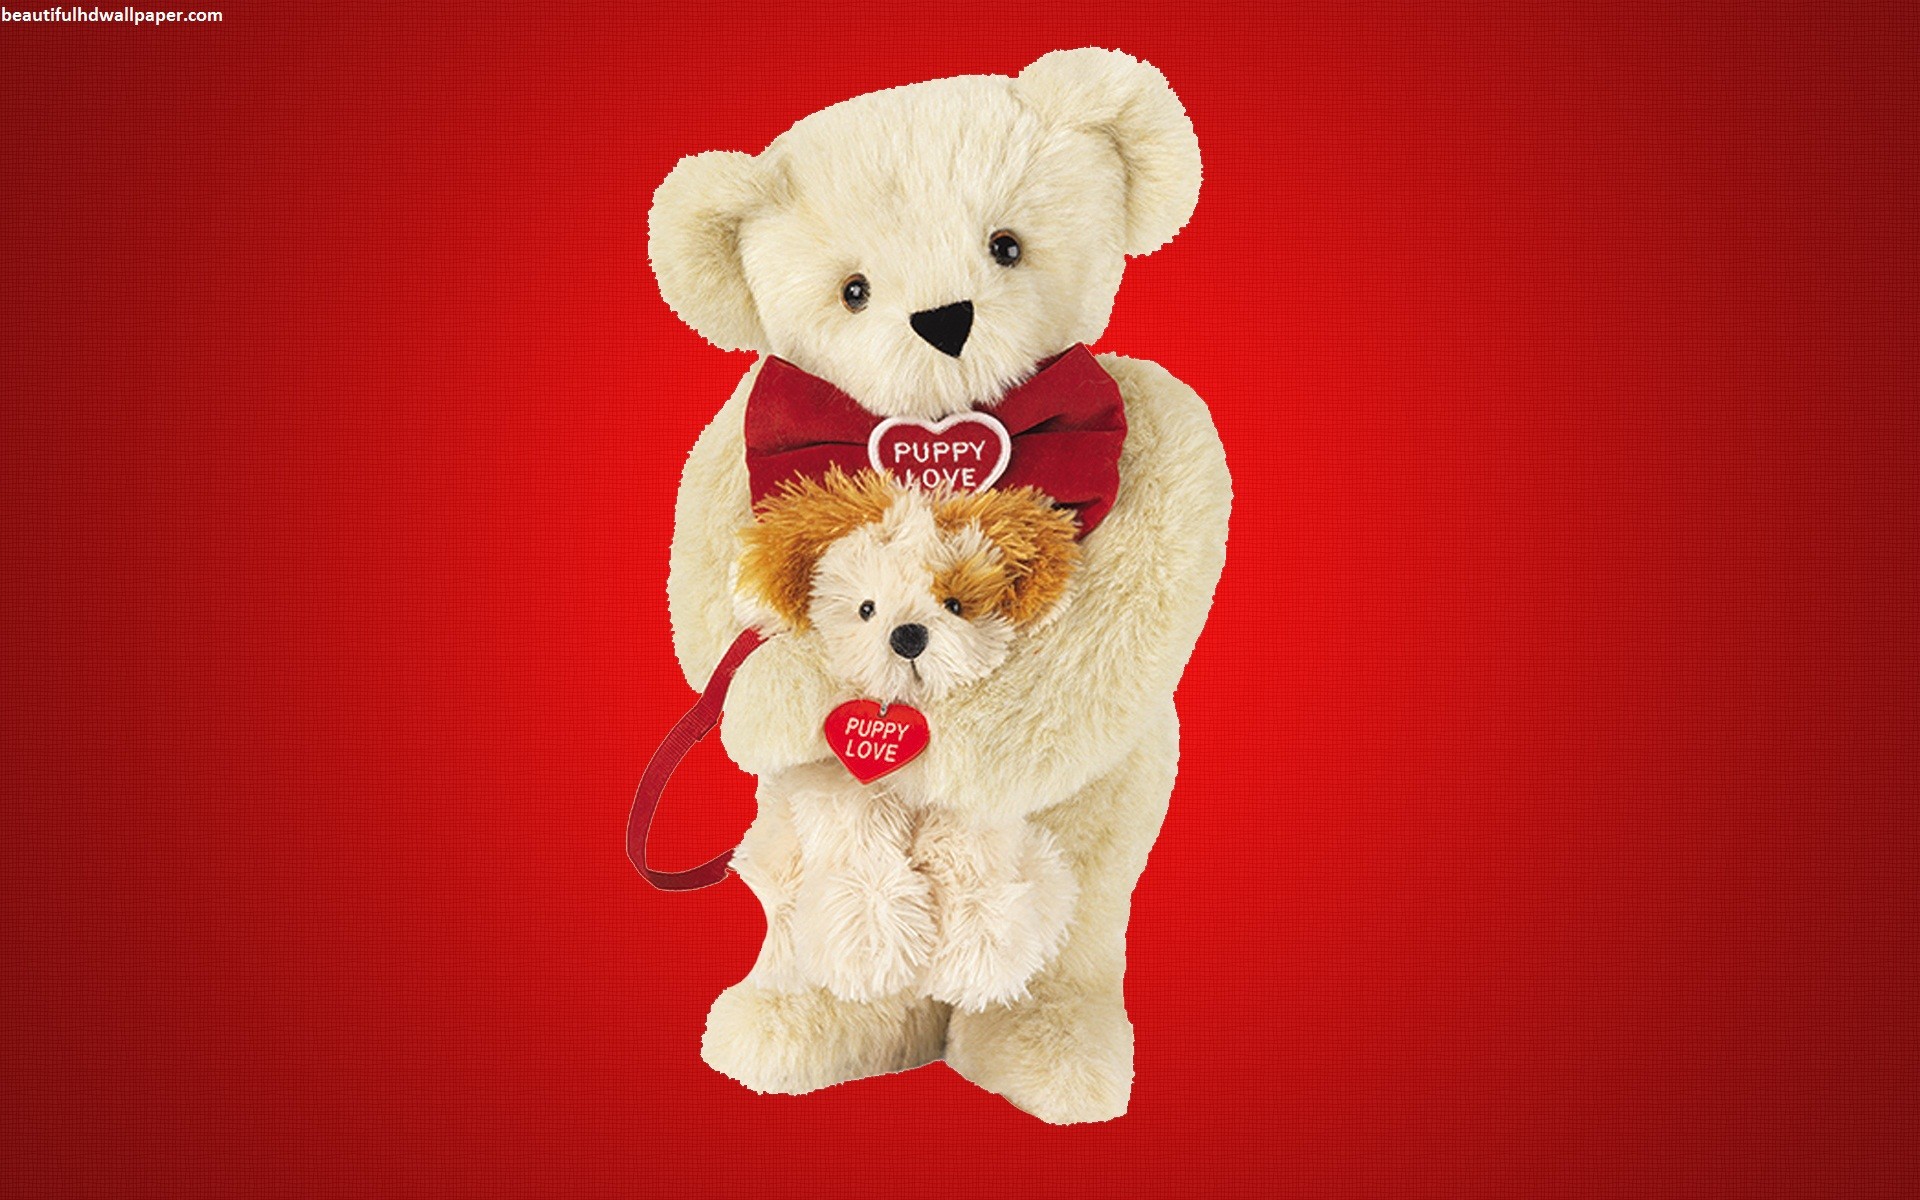 love teddy bear wallpaper,stuffed toy,teddy bear,plush,red,toy